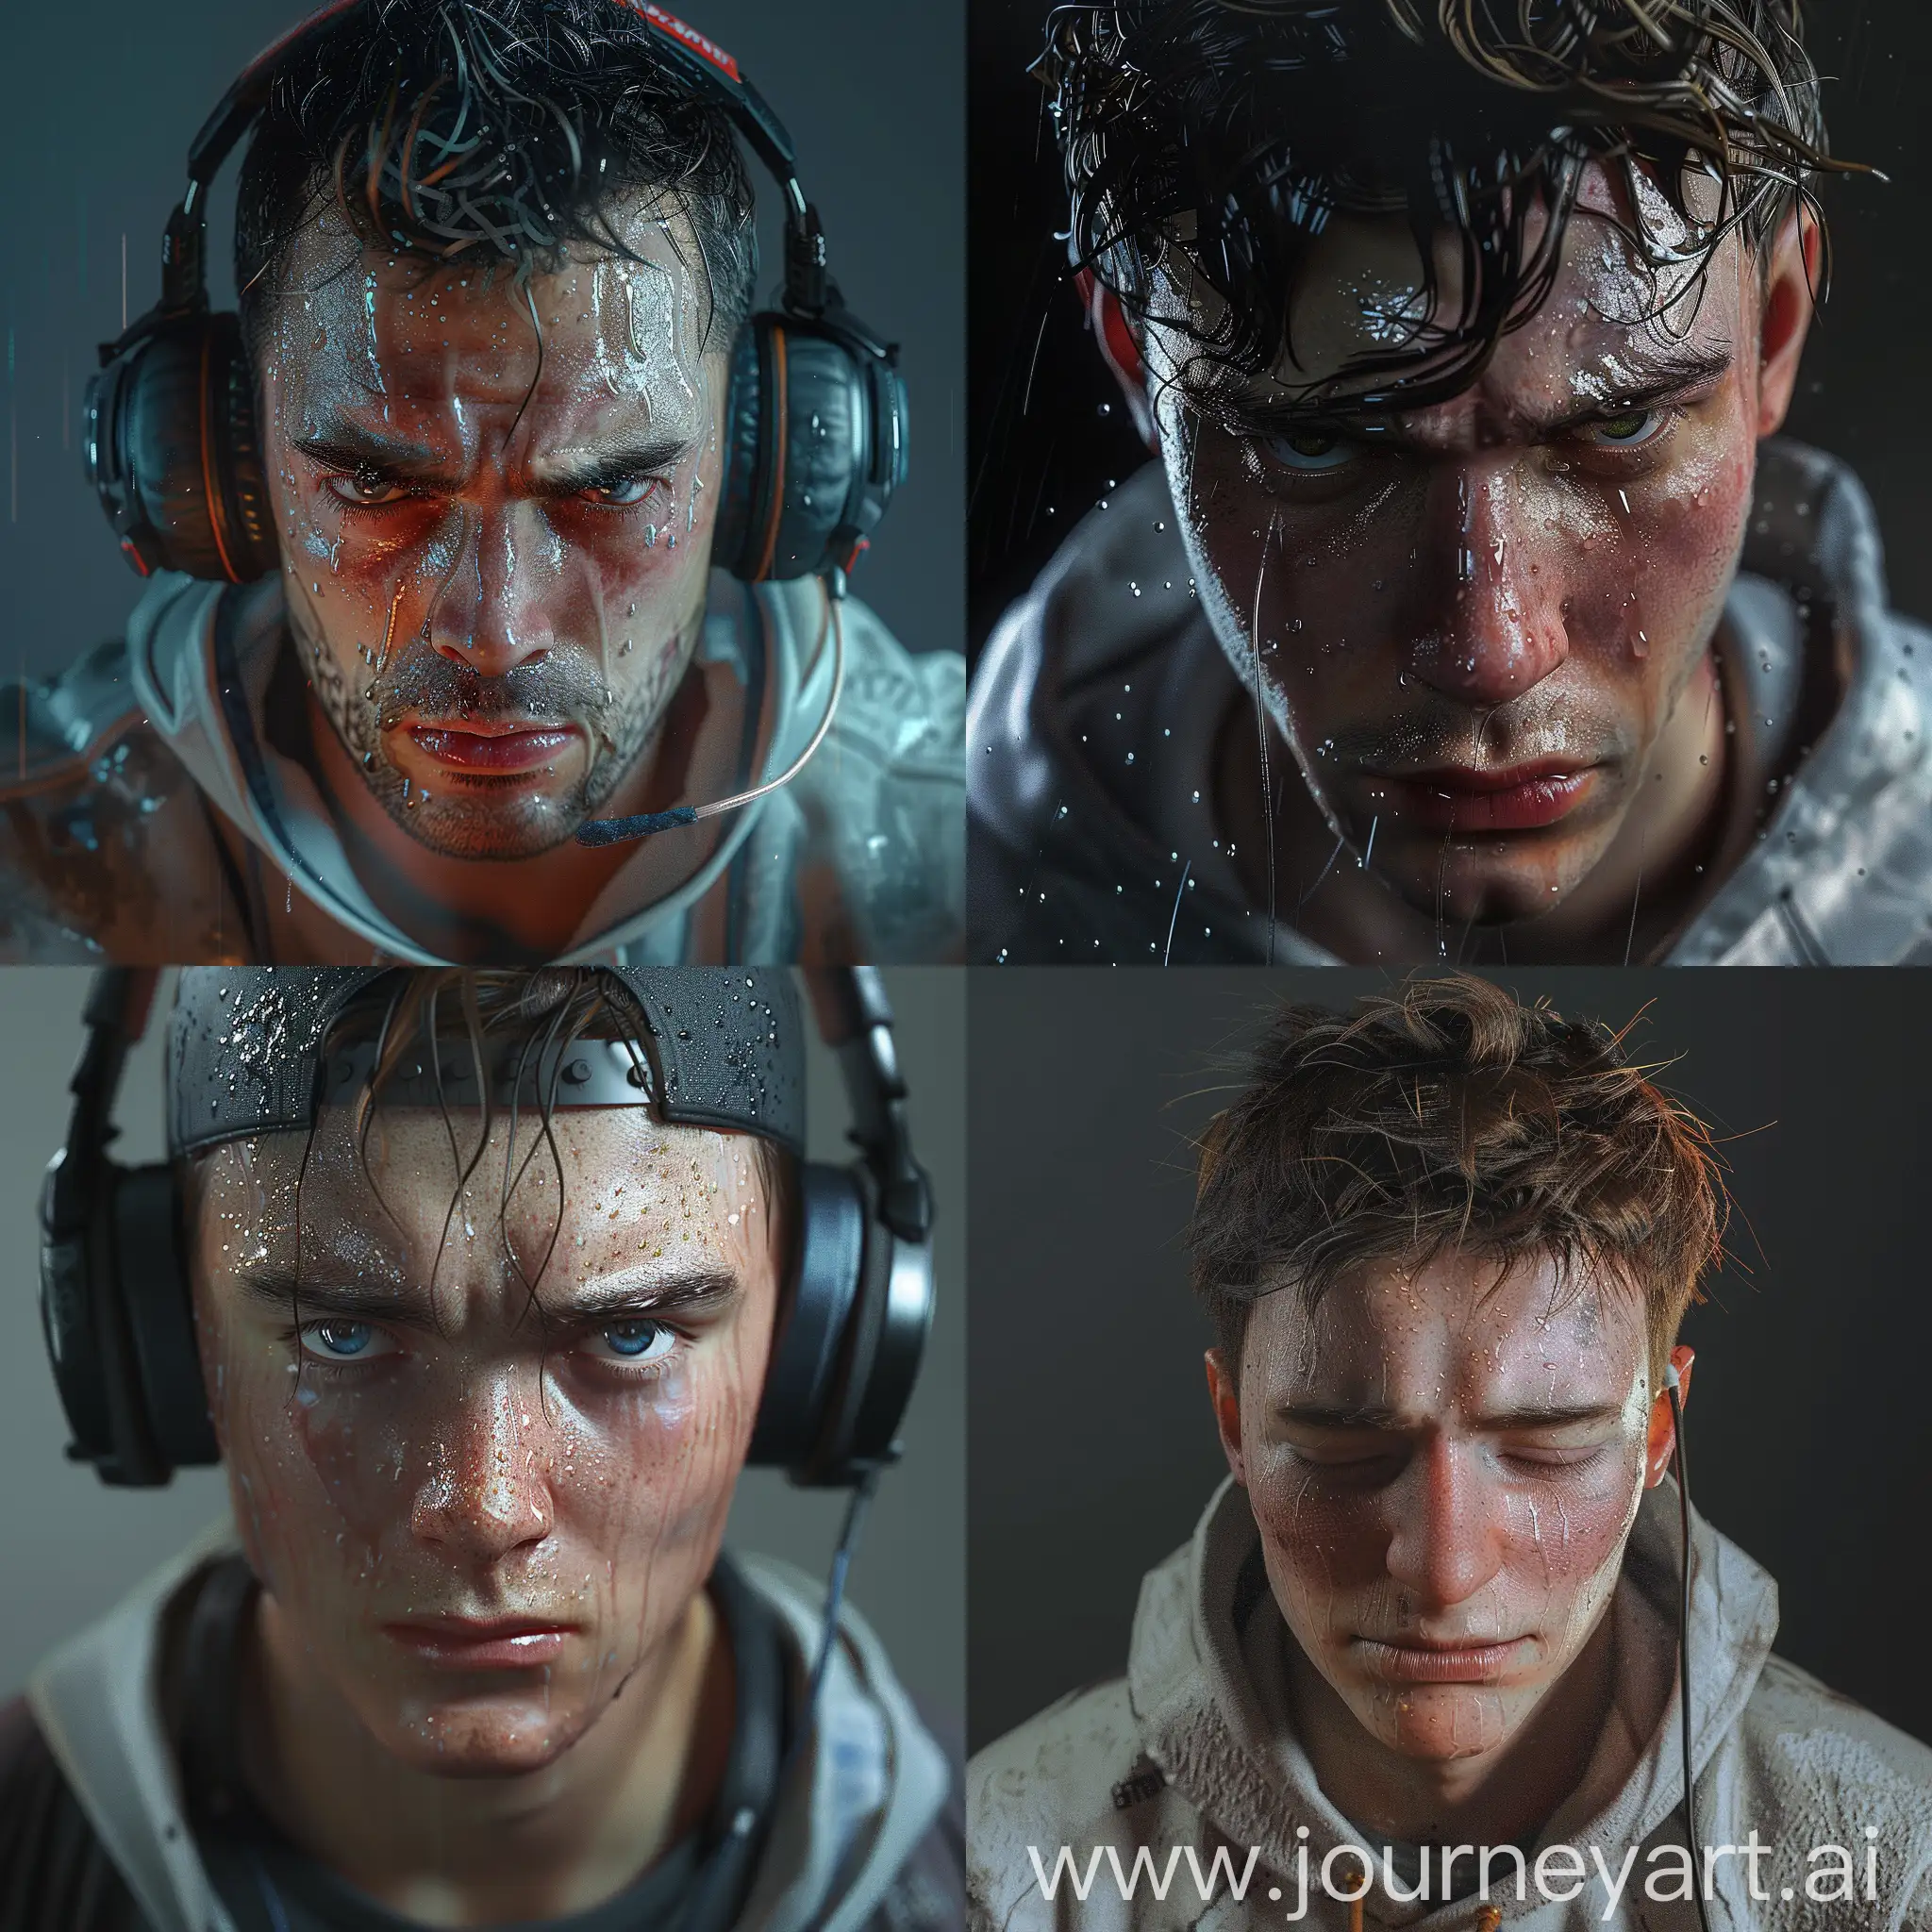 photorealistic gamer with sweaty head